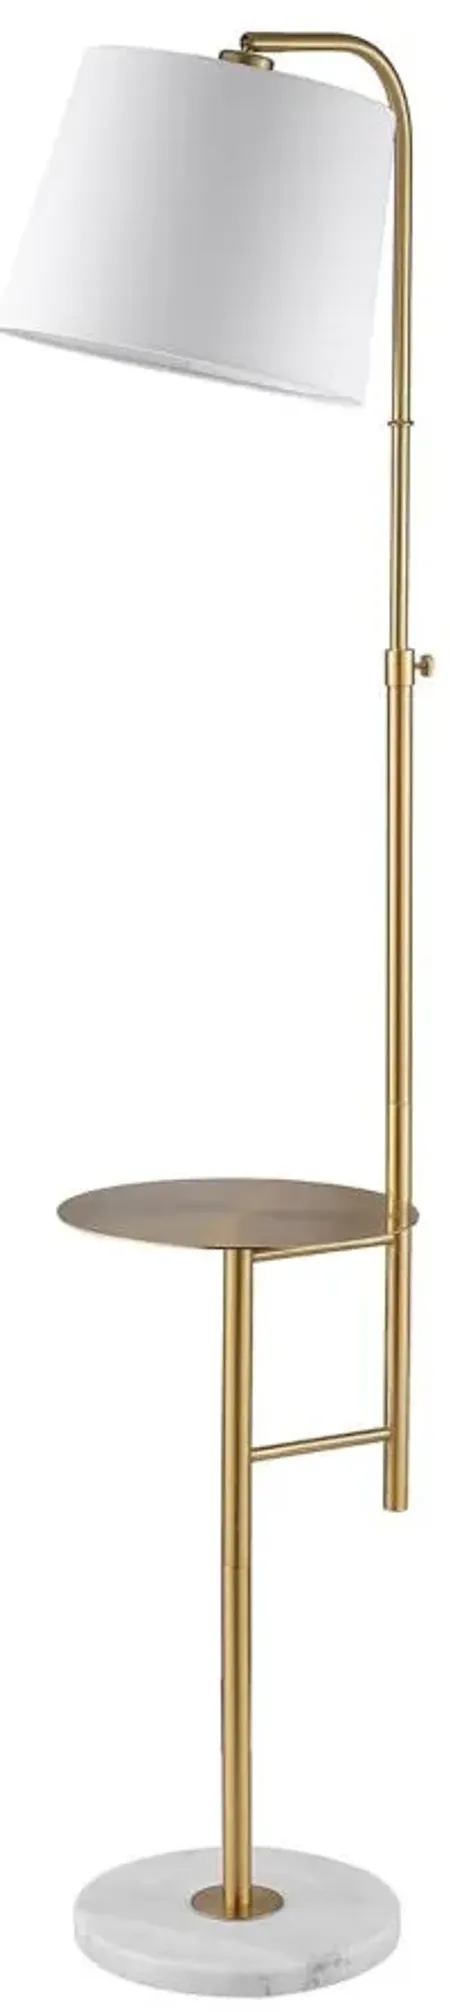 Georgiana Floor Lamp in Brass by Safavieh